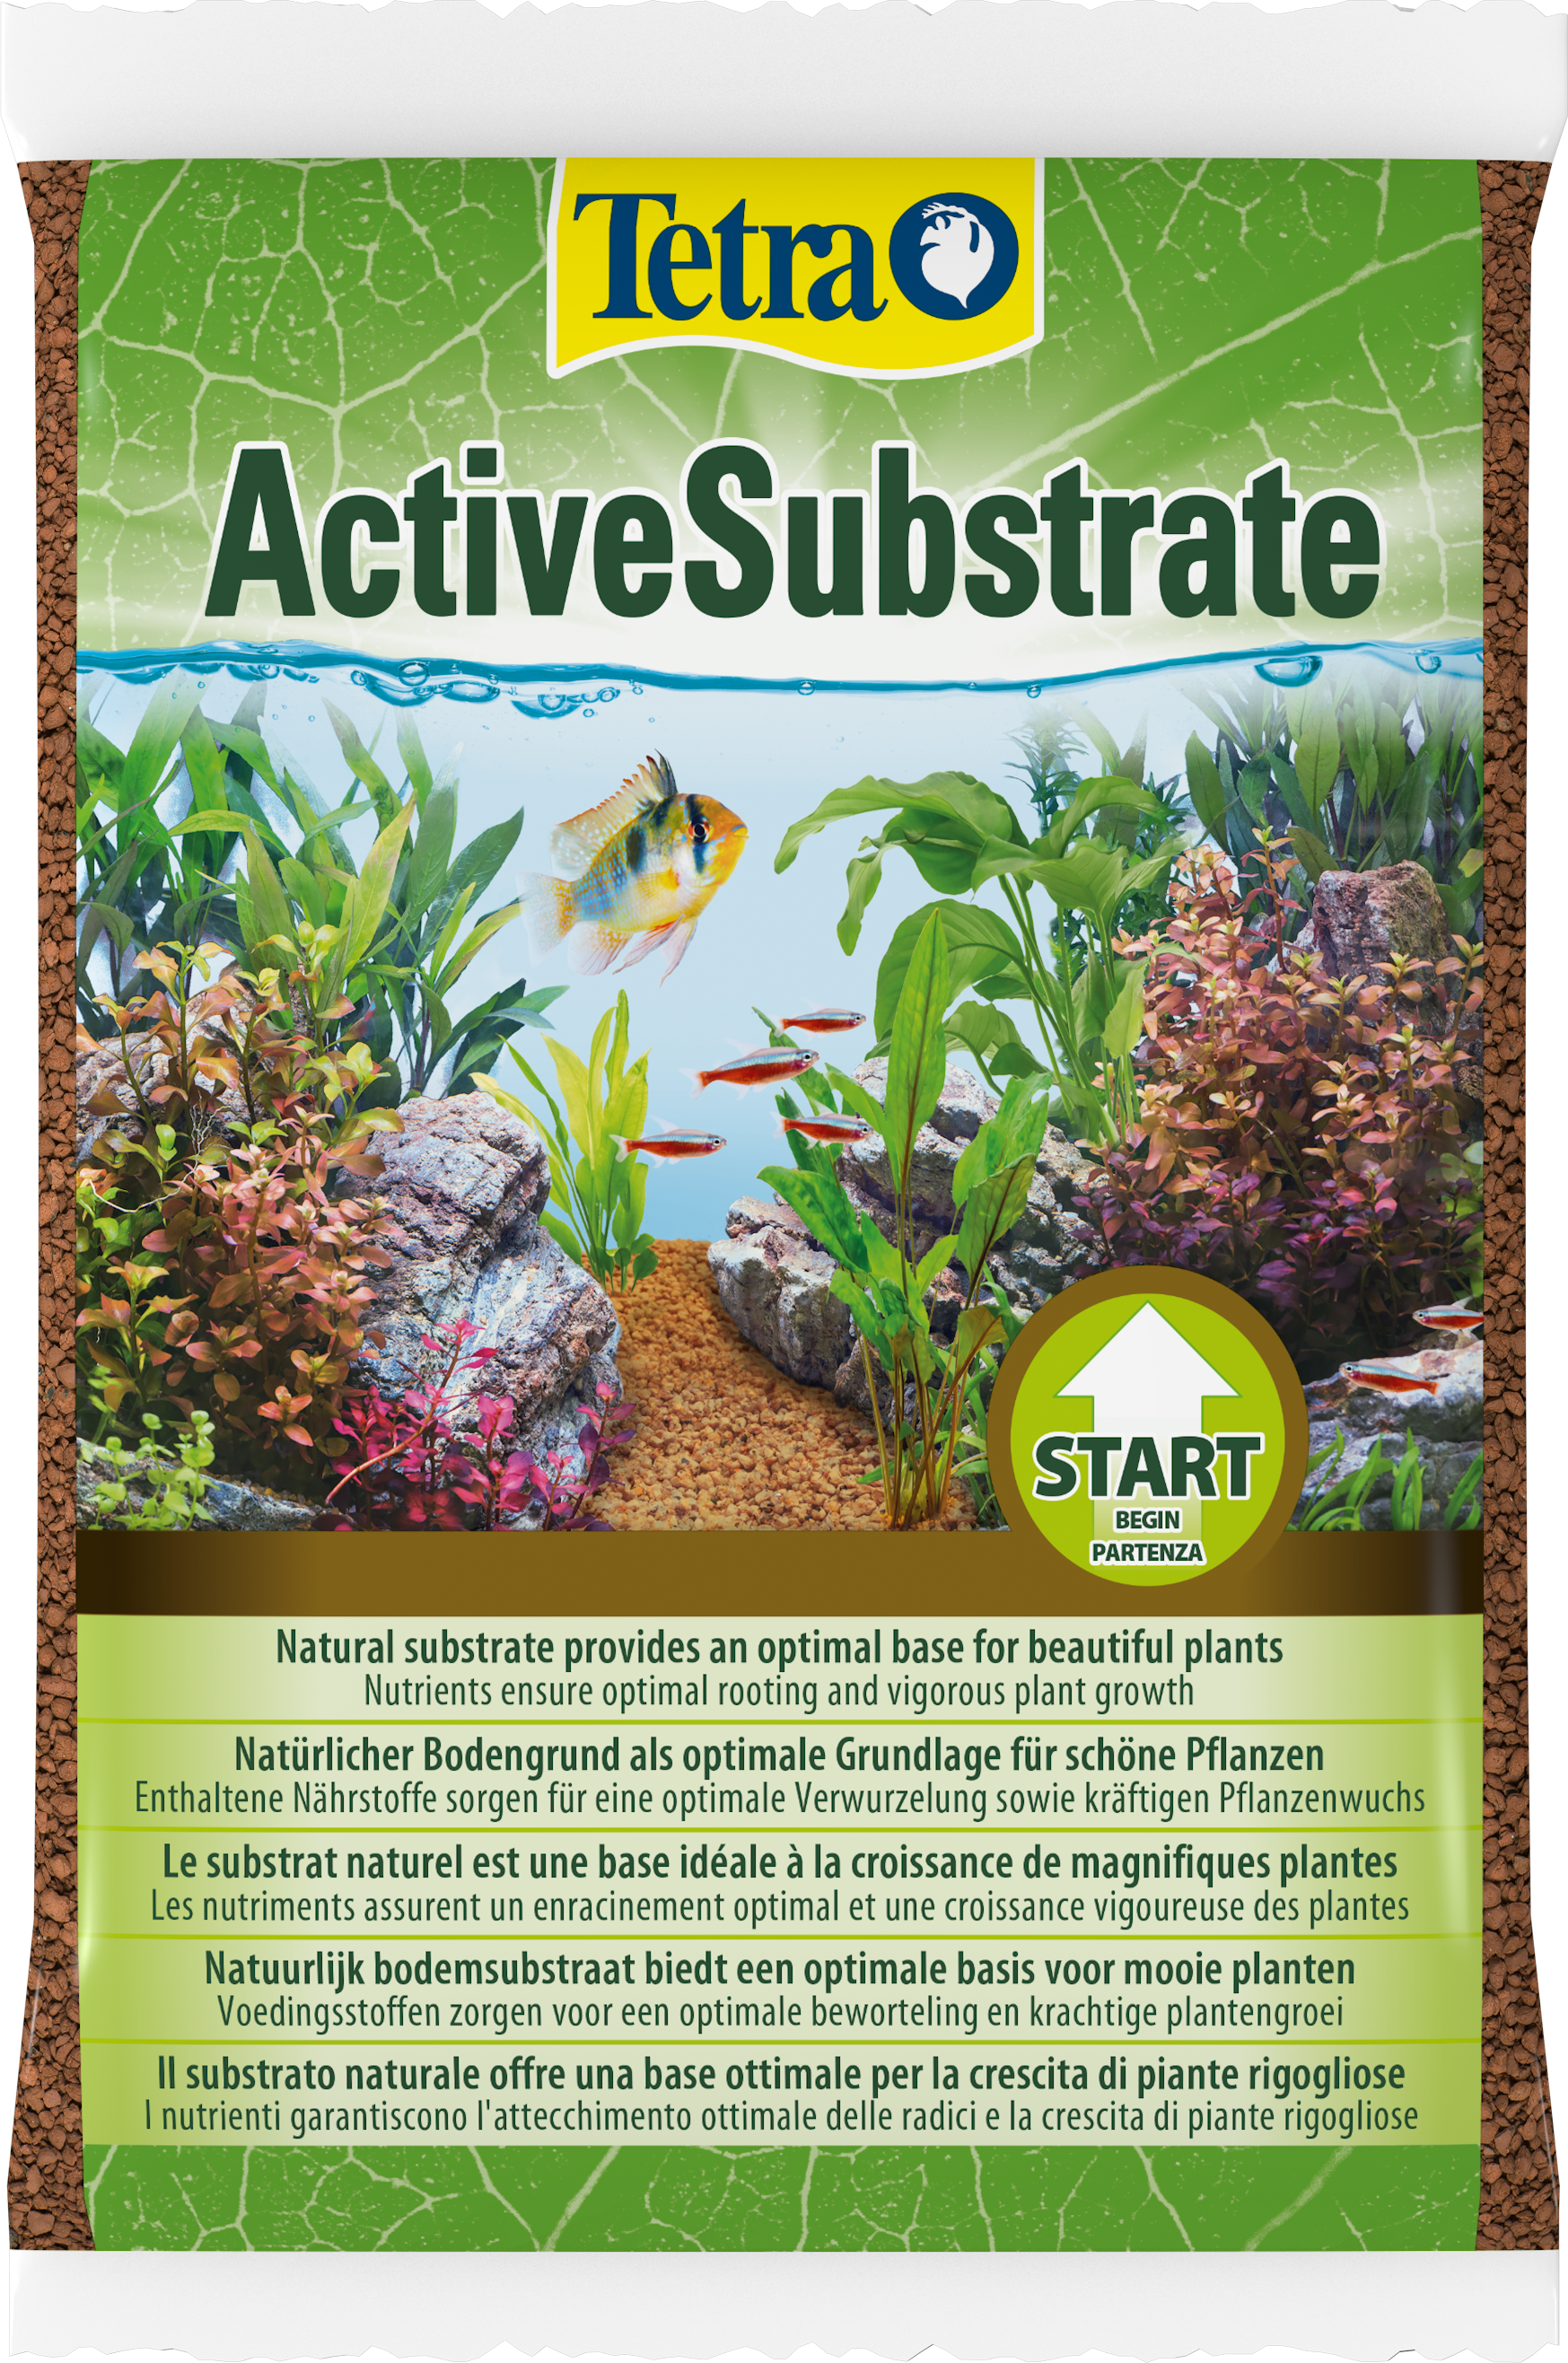 Qu'est ce que le substrat dans un aquarium? —